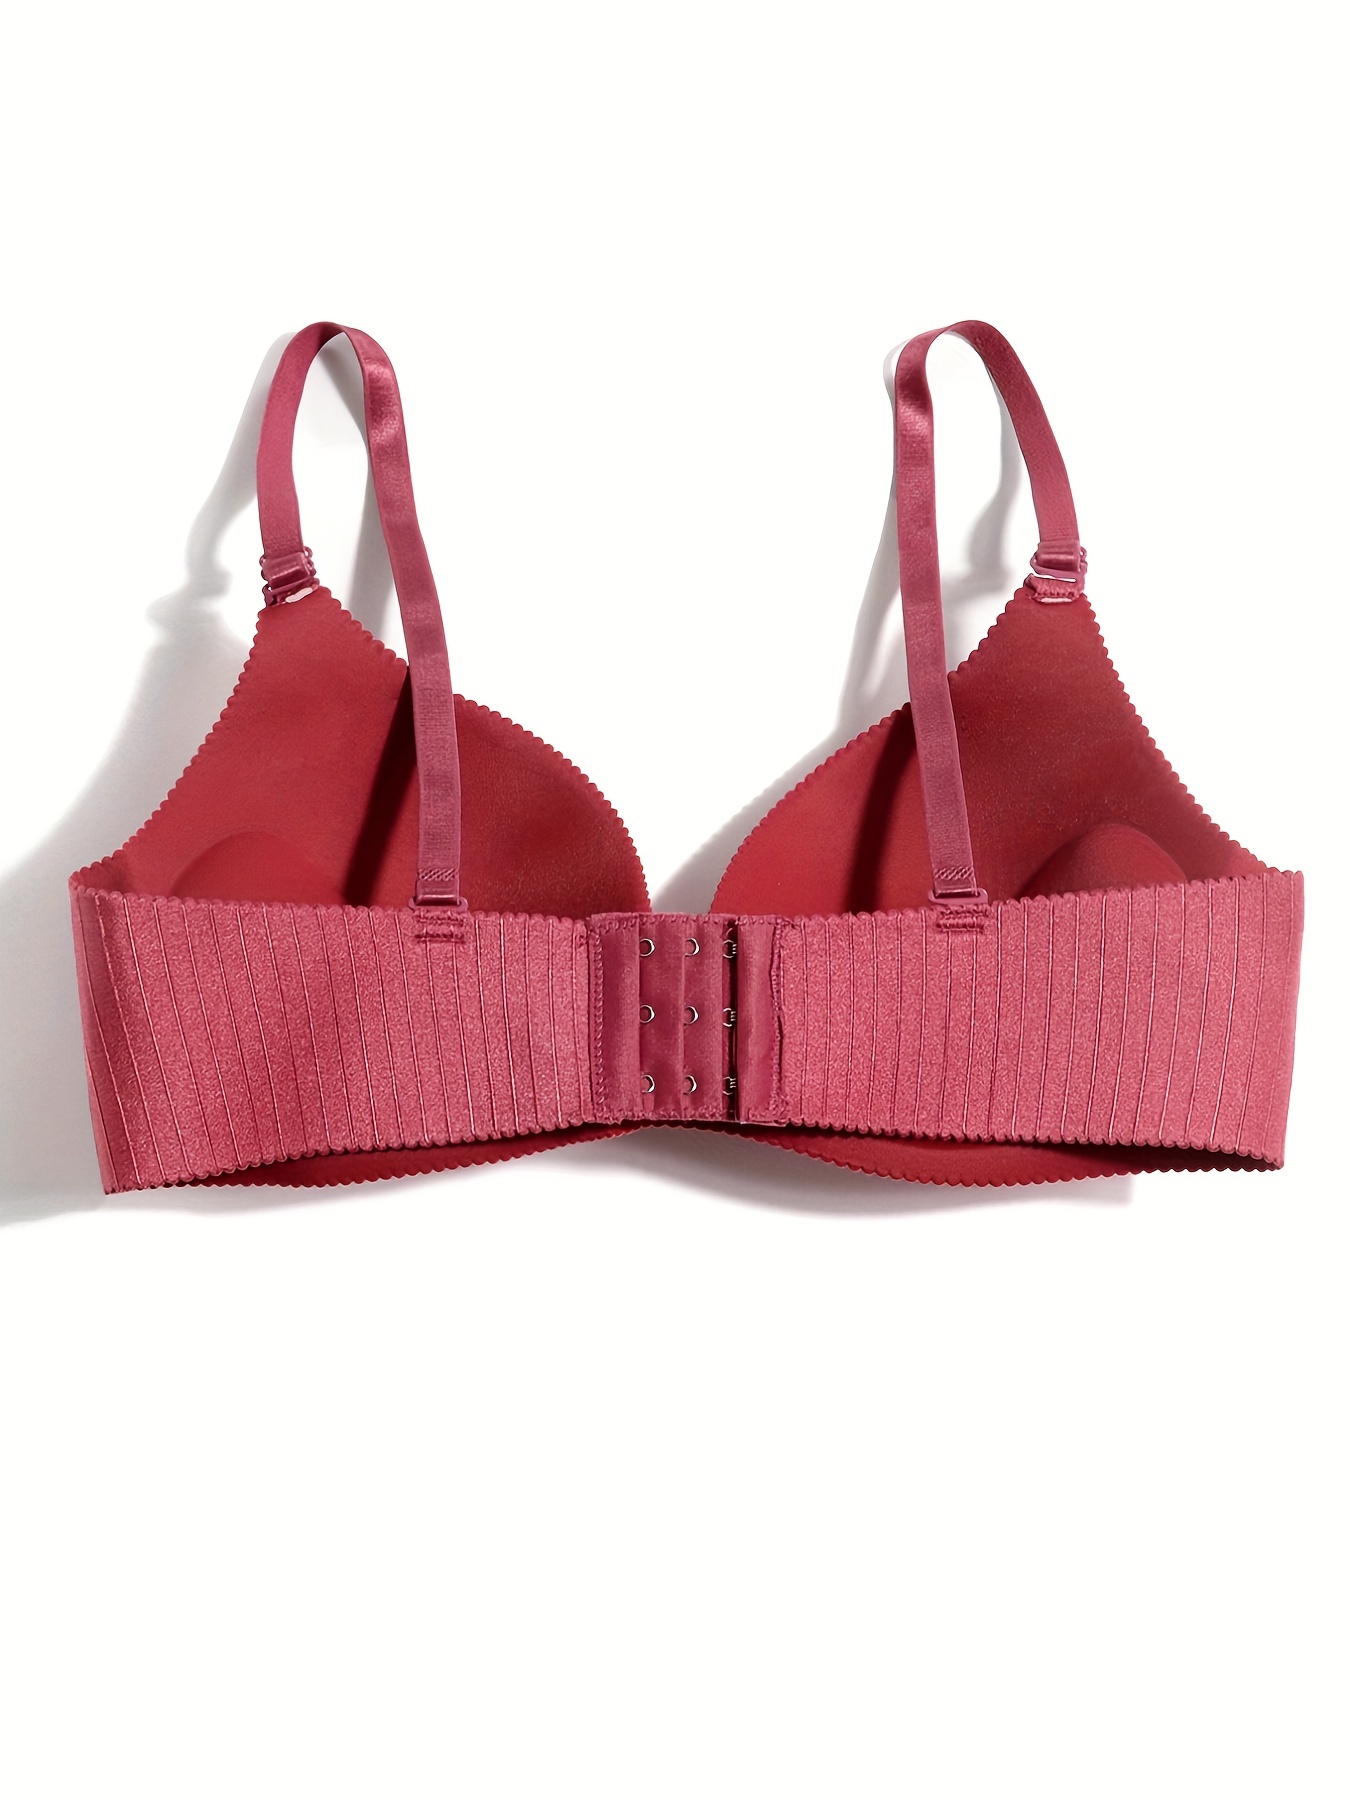 Victoria's Secret PINK push up bra, Women's Fashion, Undergarments